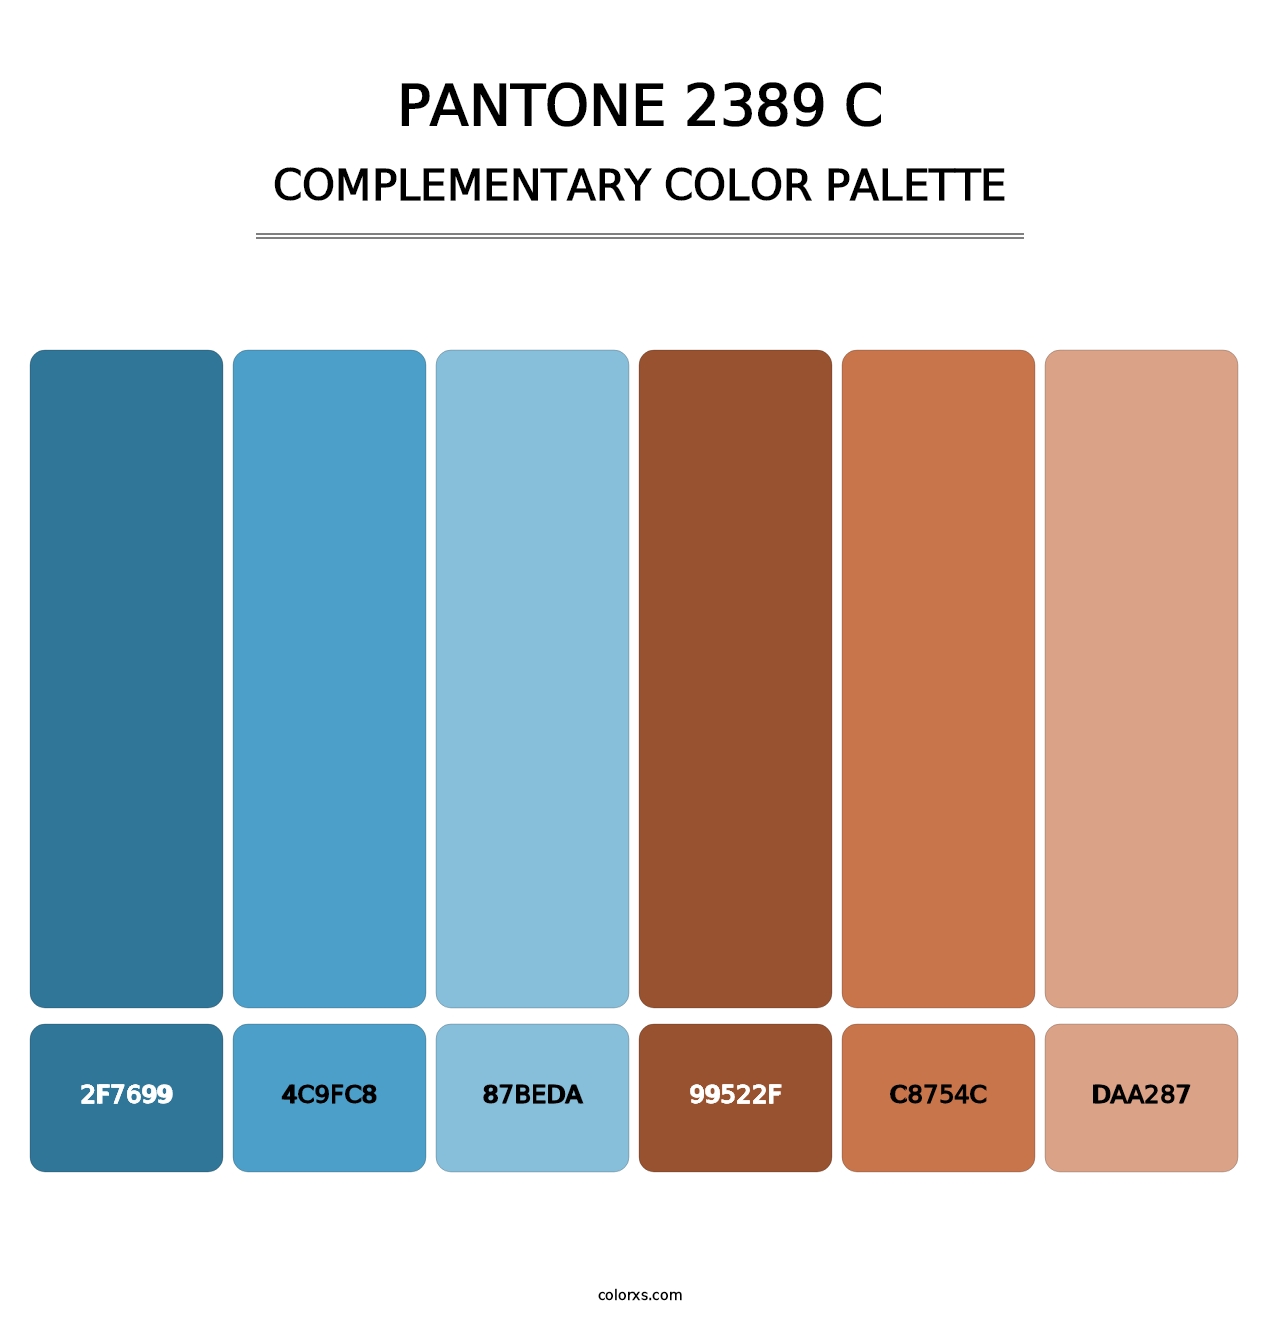 PANTONE 2389 C - Complementary Color Palette